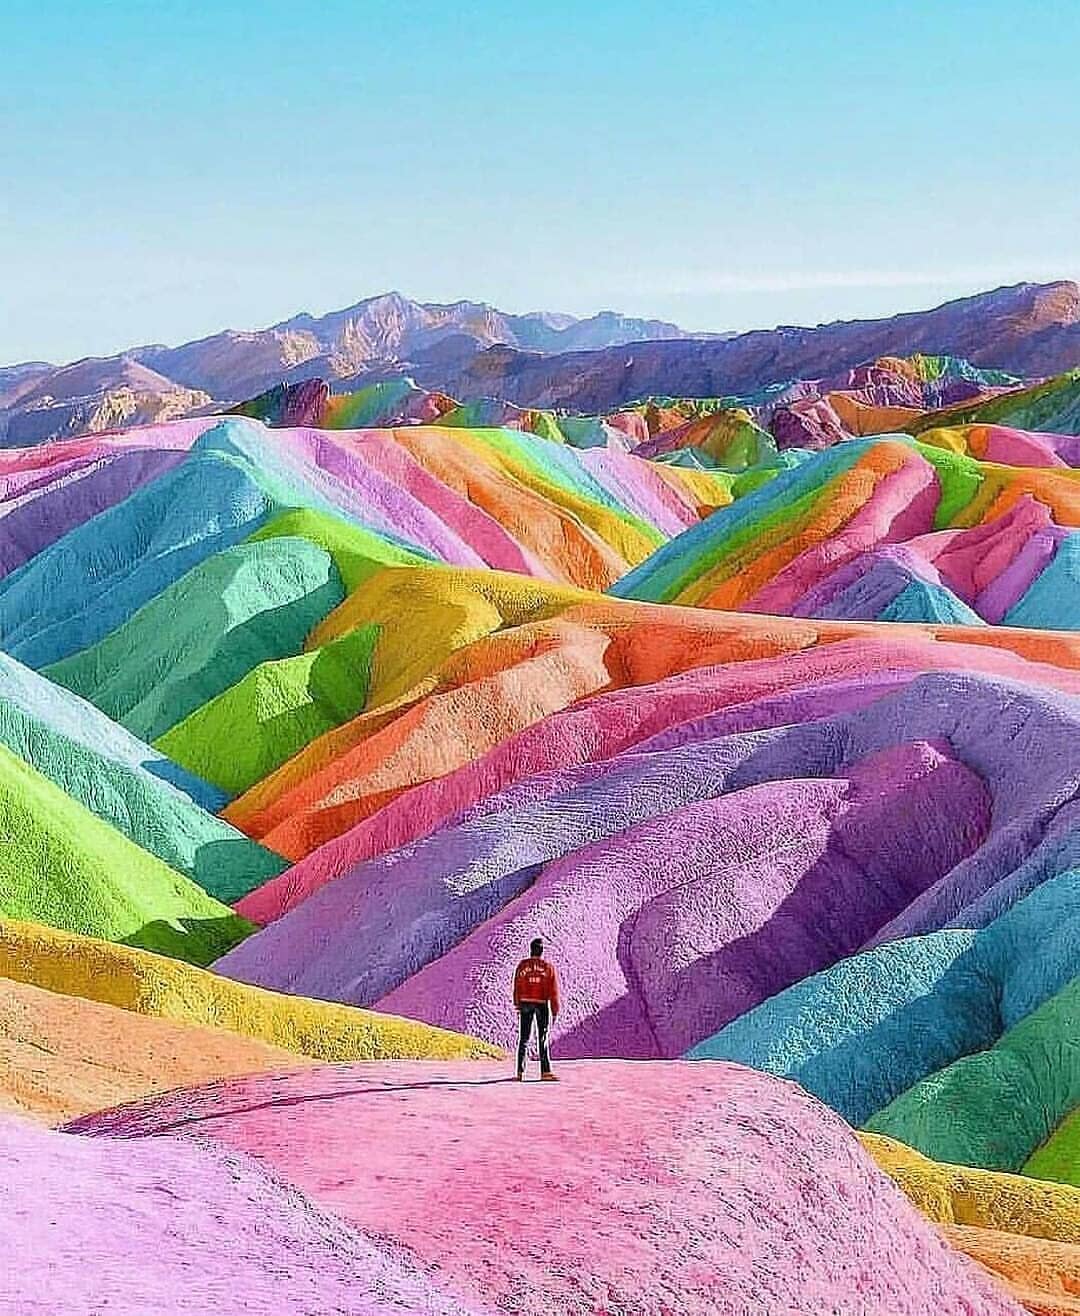 Rainbow mountains in Peru